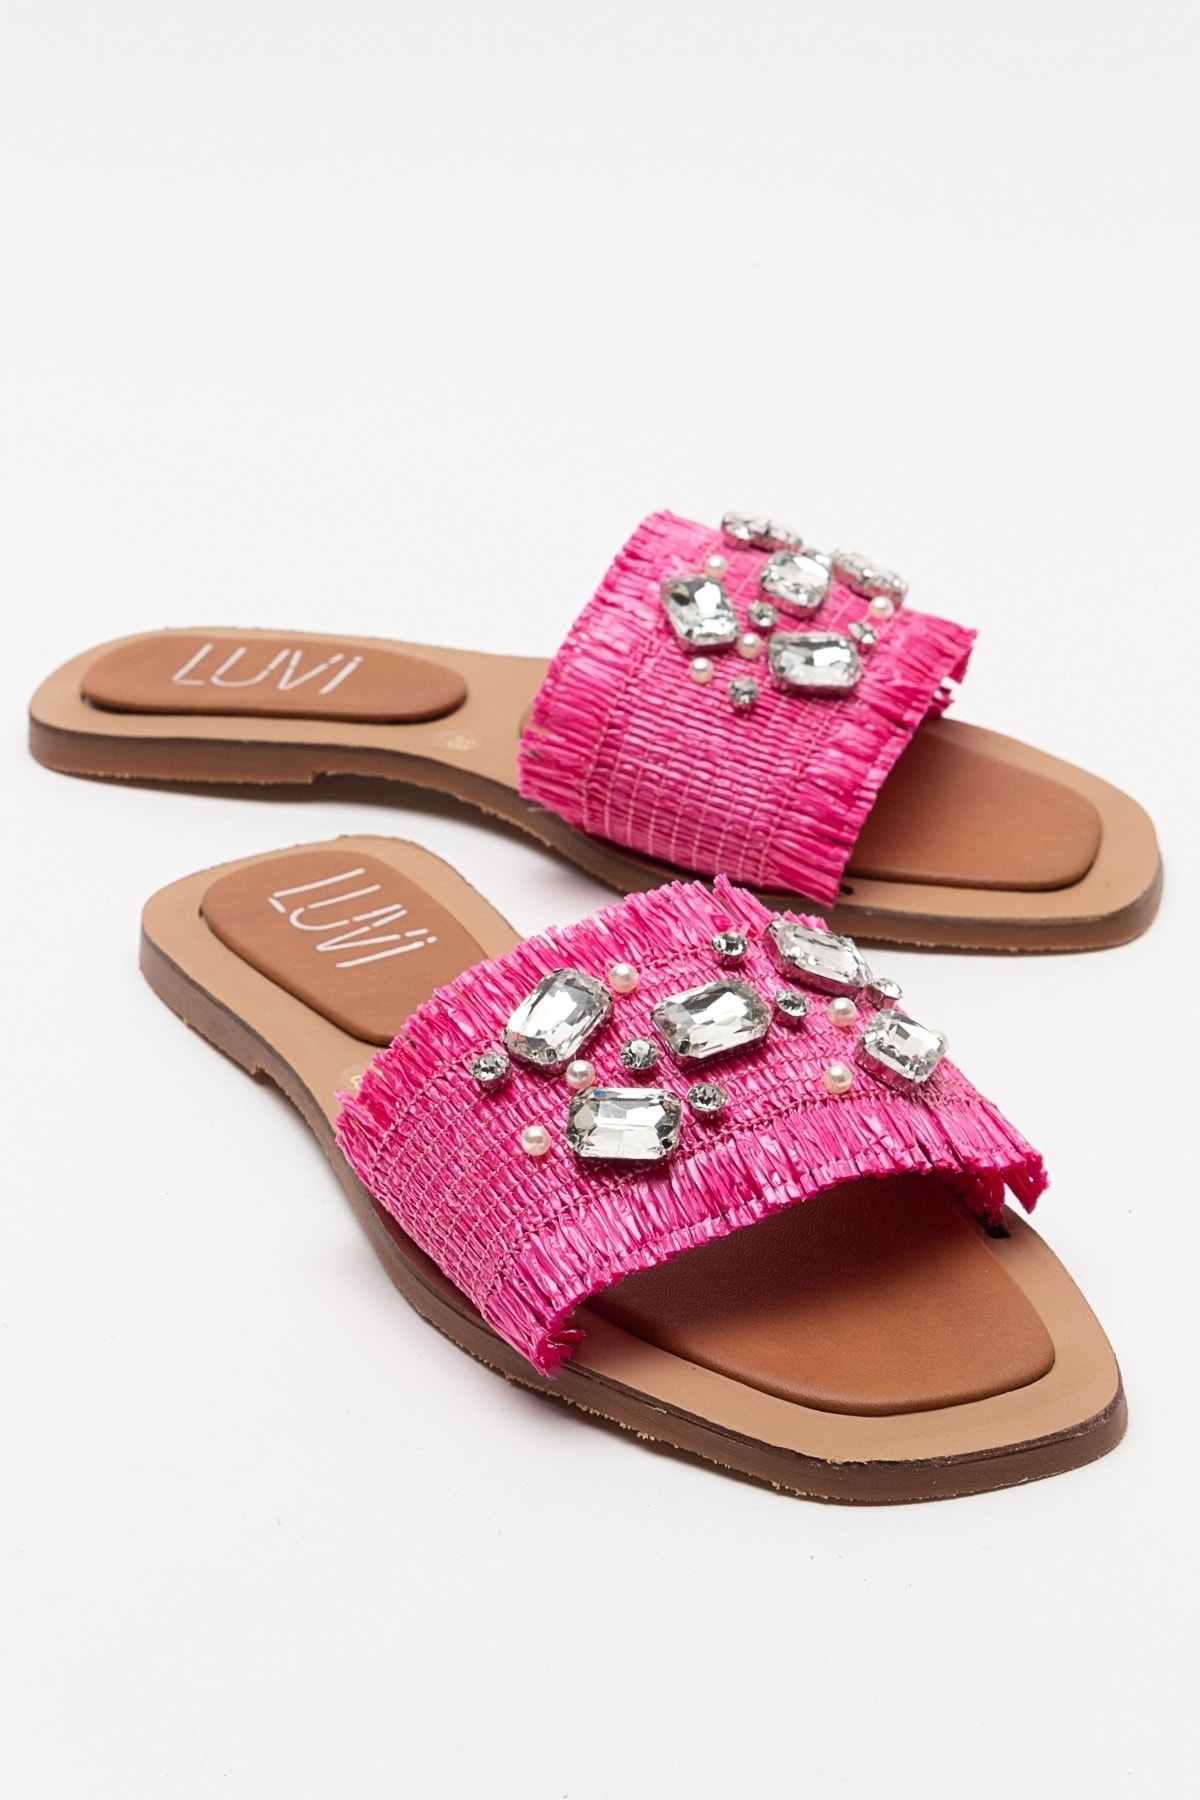 Levně LuviShoes NORVE Women's Pink Straw Stone Slippers